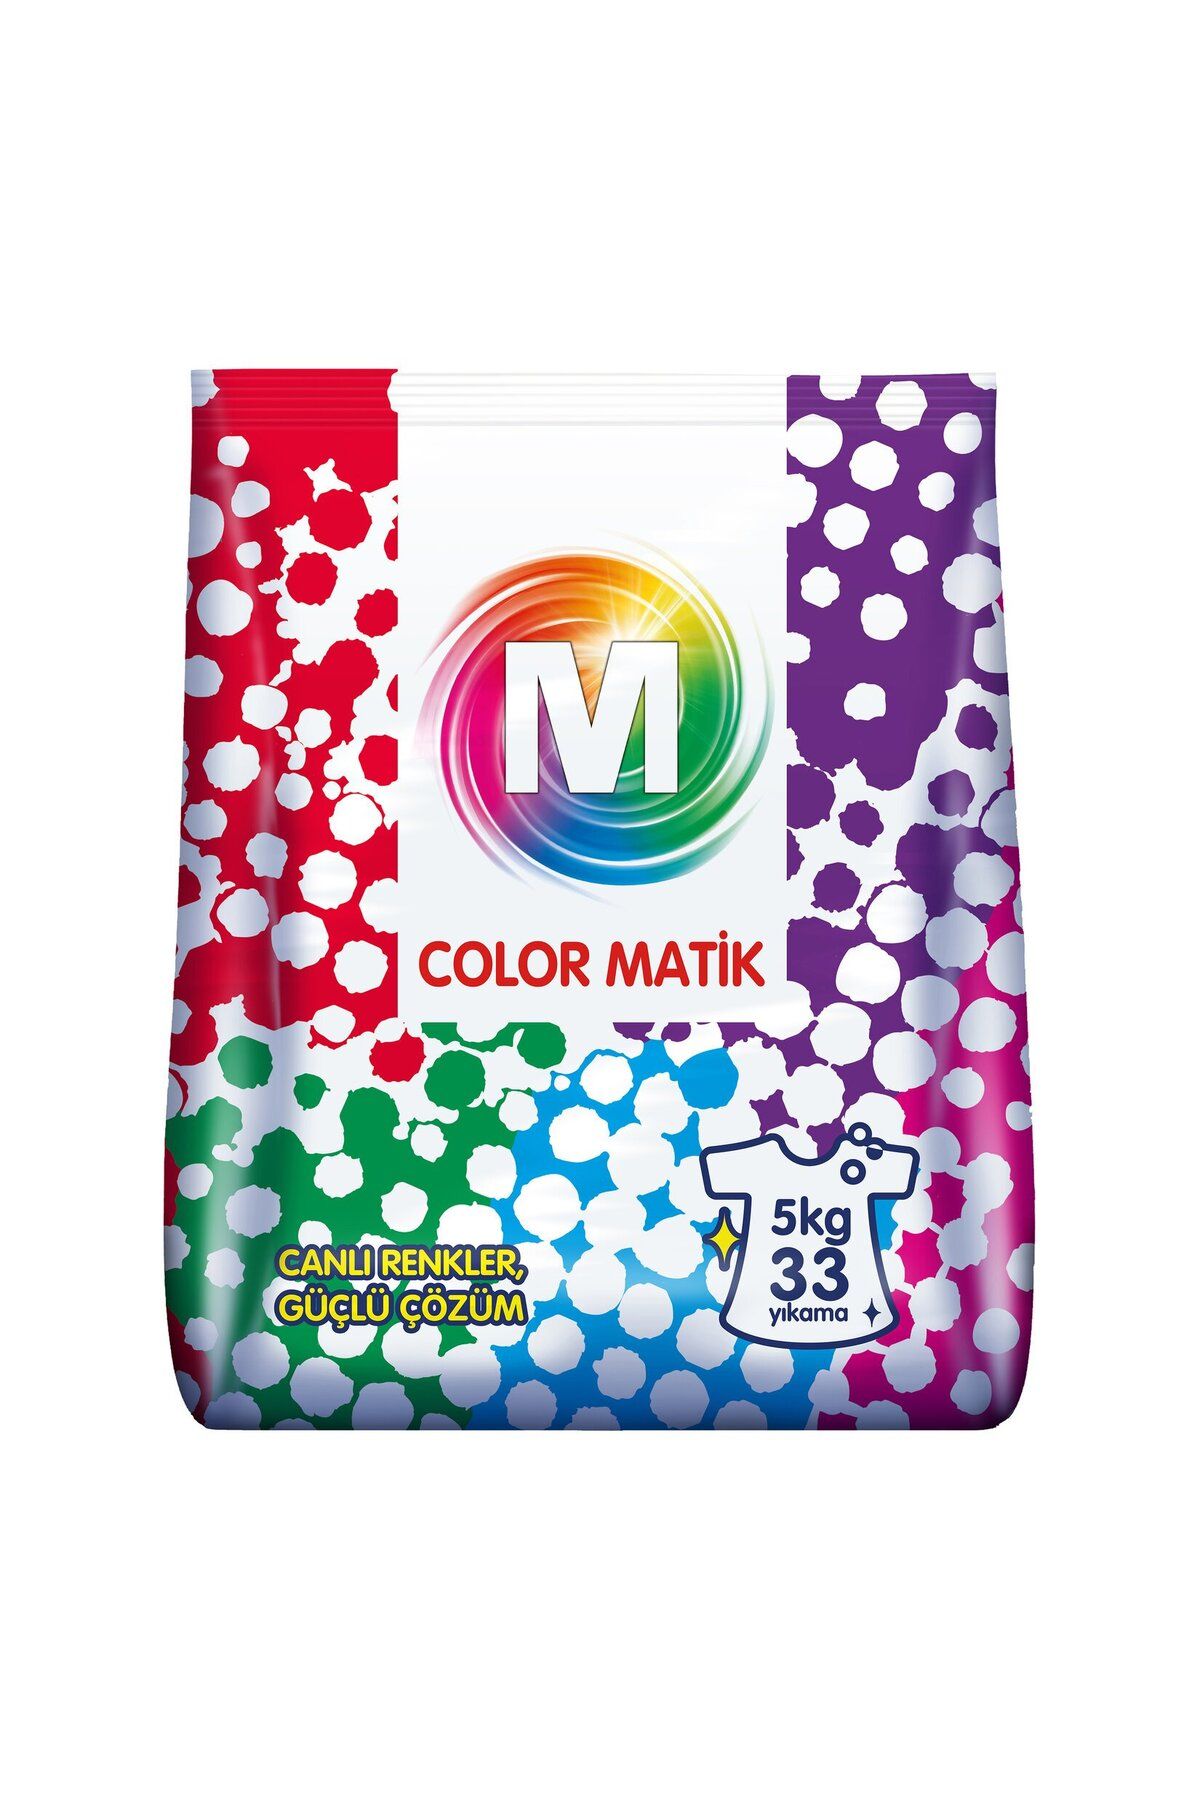 Migros Color Matik 5 Kg 33 Yıkama